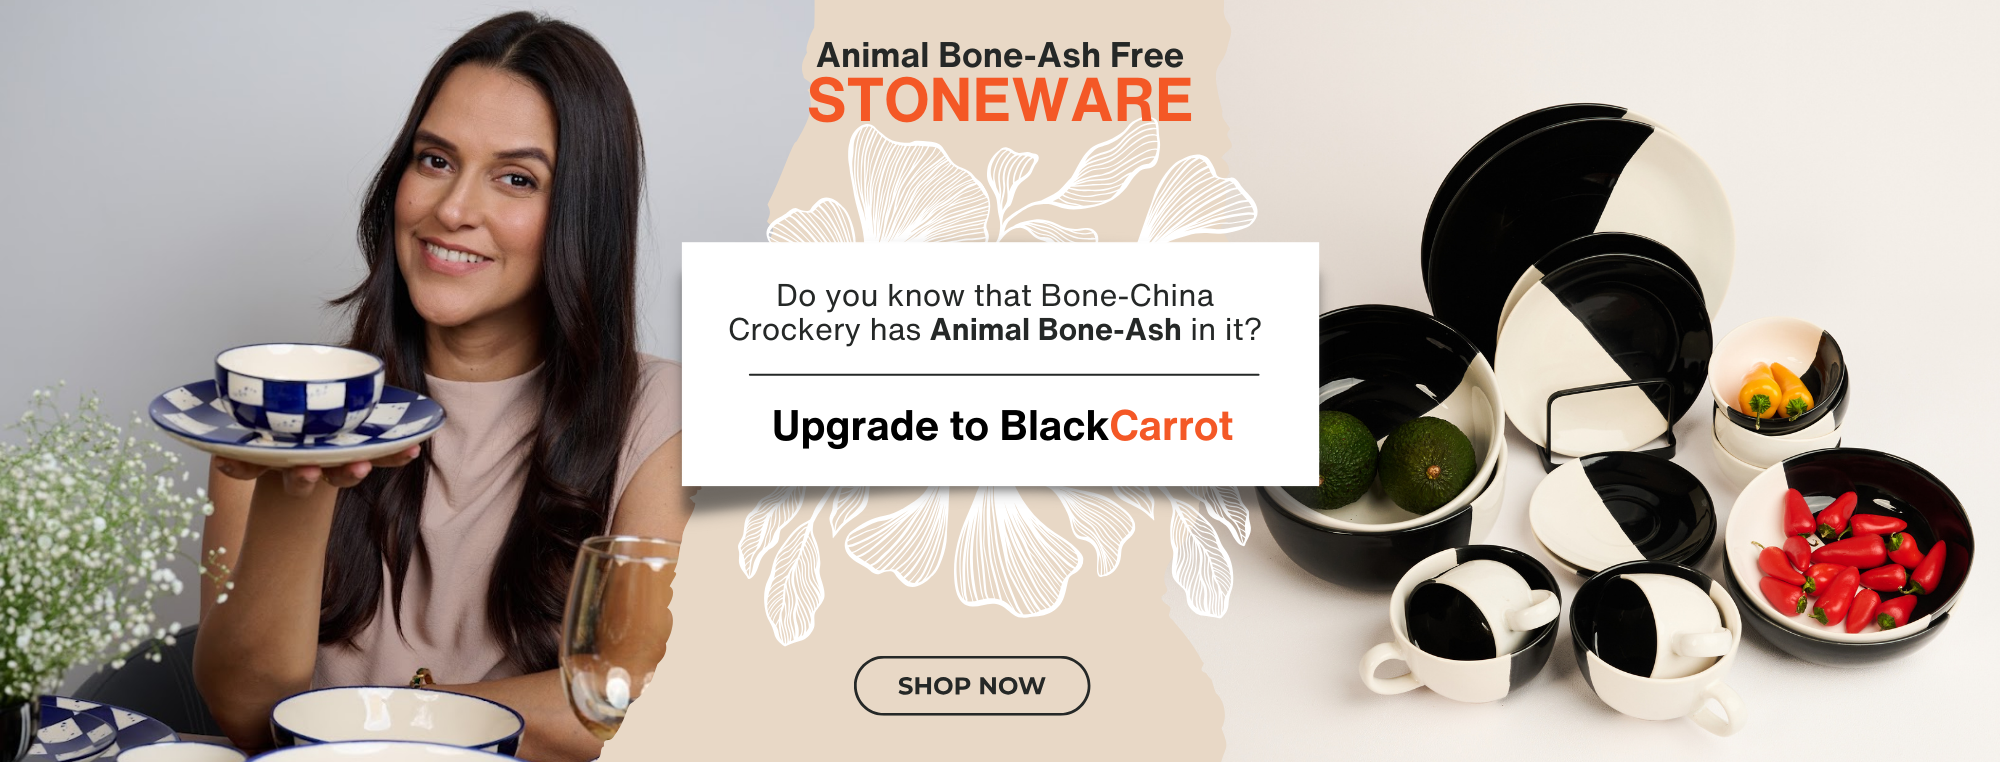 BlackCarrot Stoneware